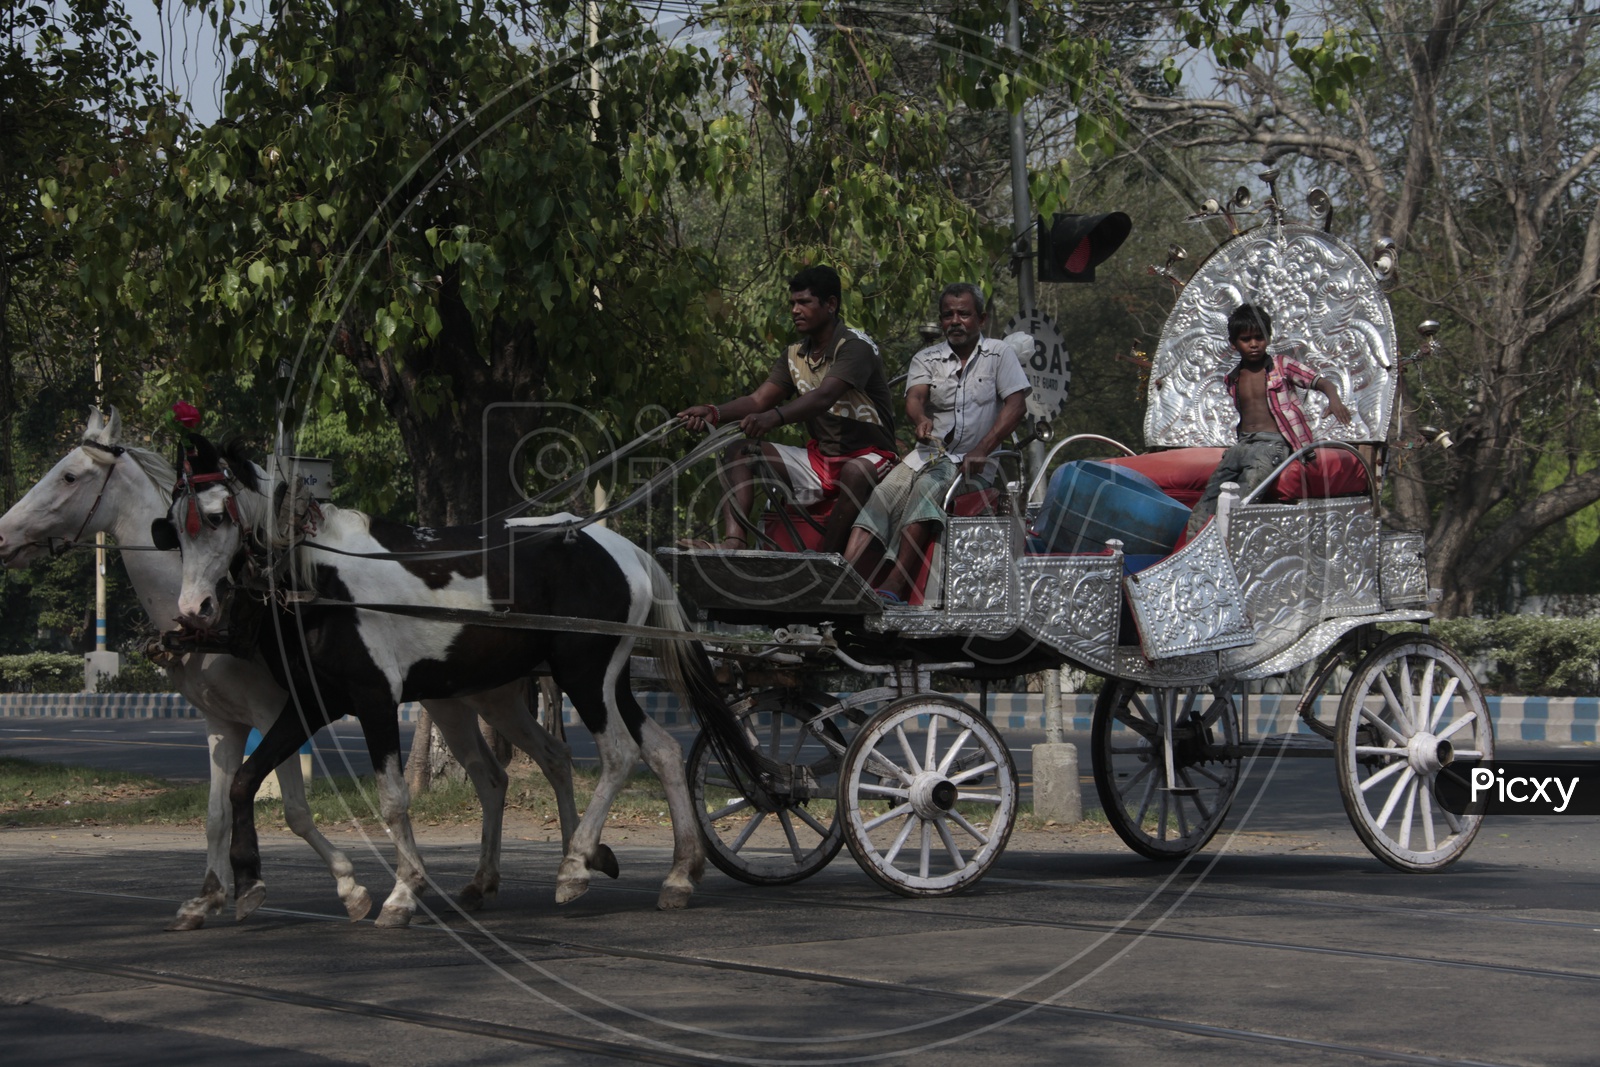 Indian Men riding a Chariot